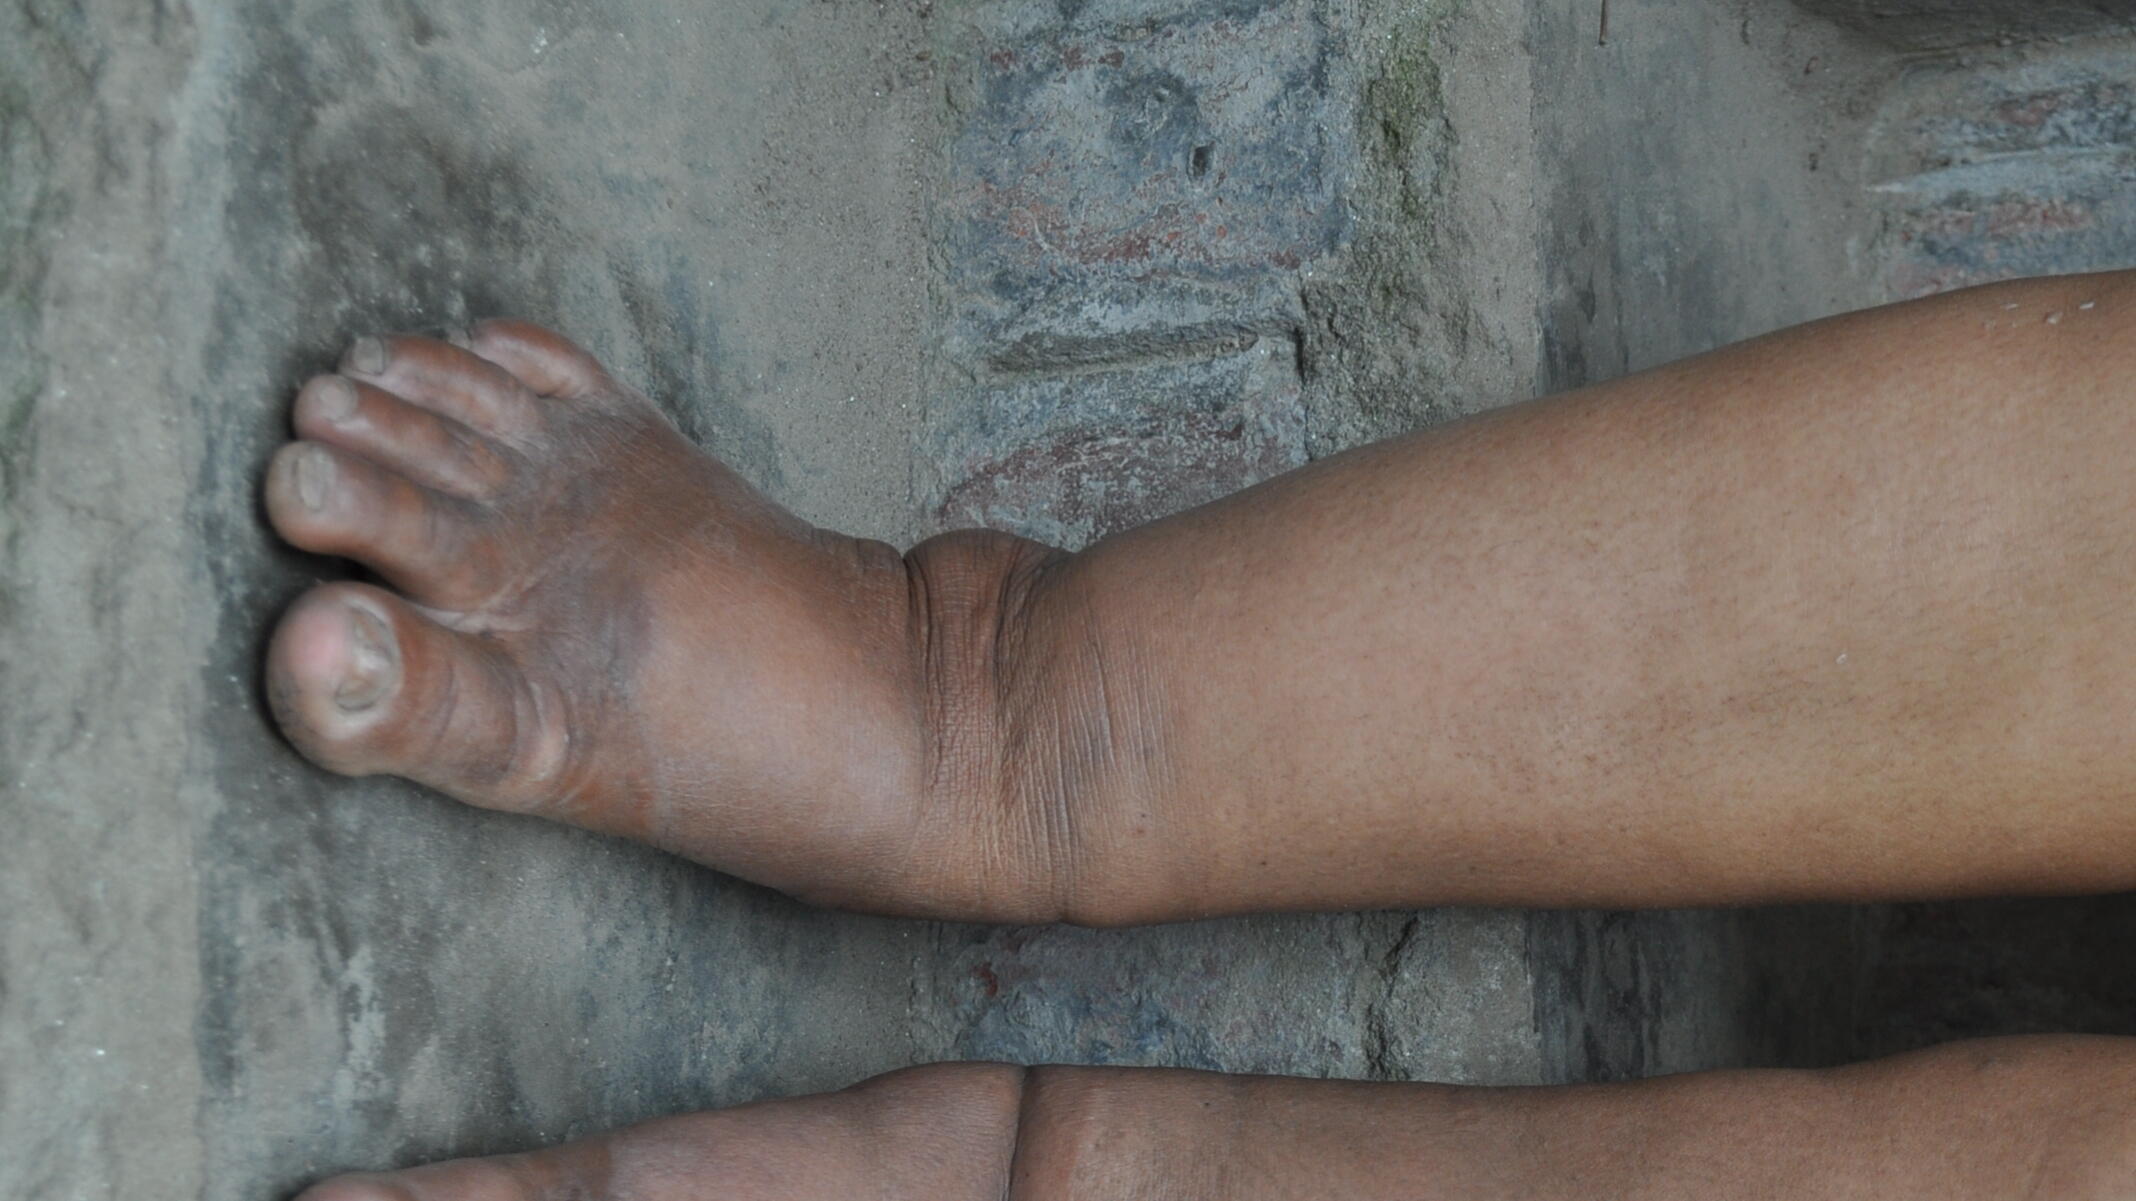 A patient in Bangladesh with Lymphodema - a symptom of LF